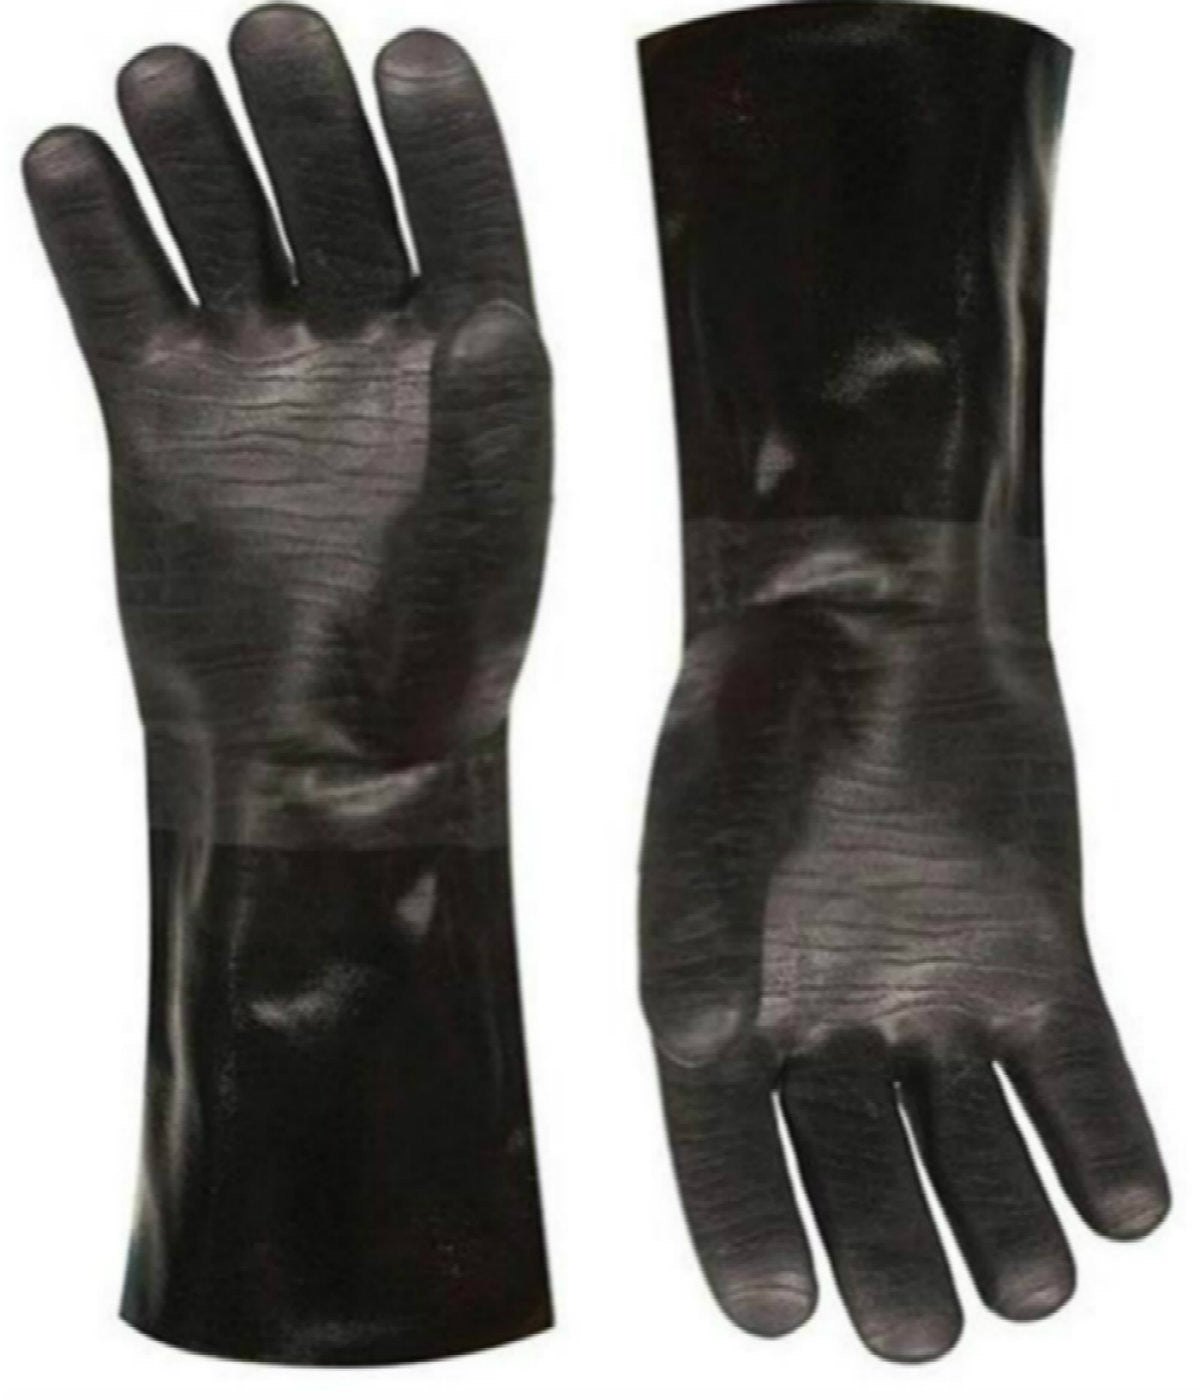 Charcoal Companion Pit Mitt Pro BBQ Gloves – Atlanta Grill Company